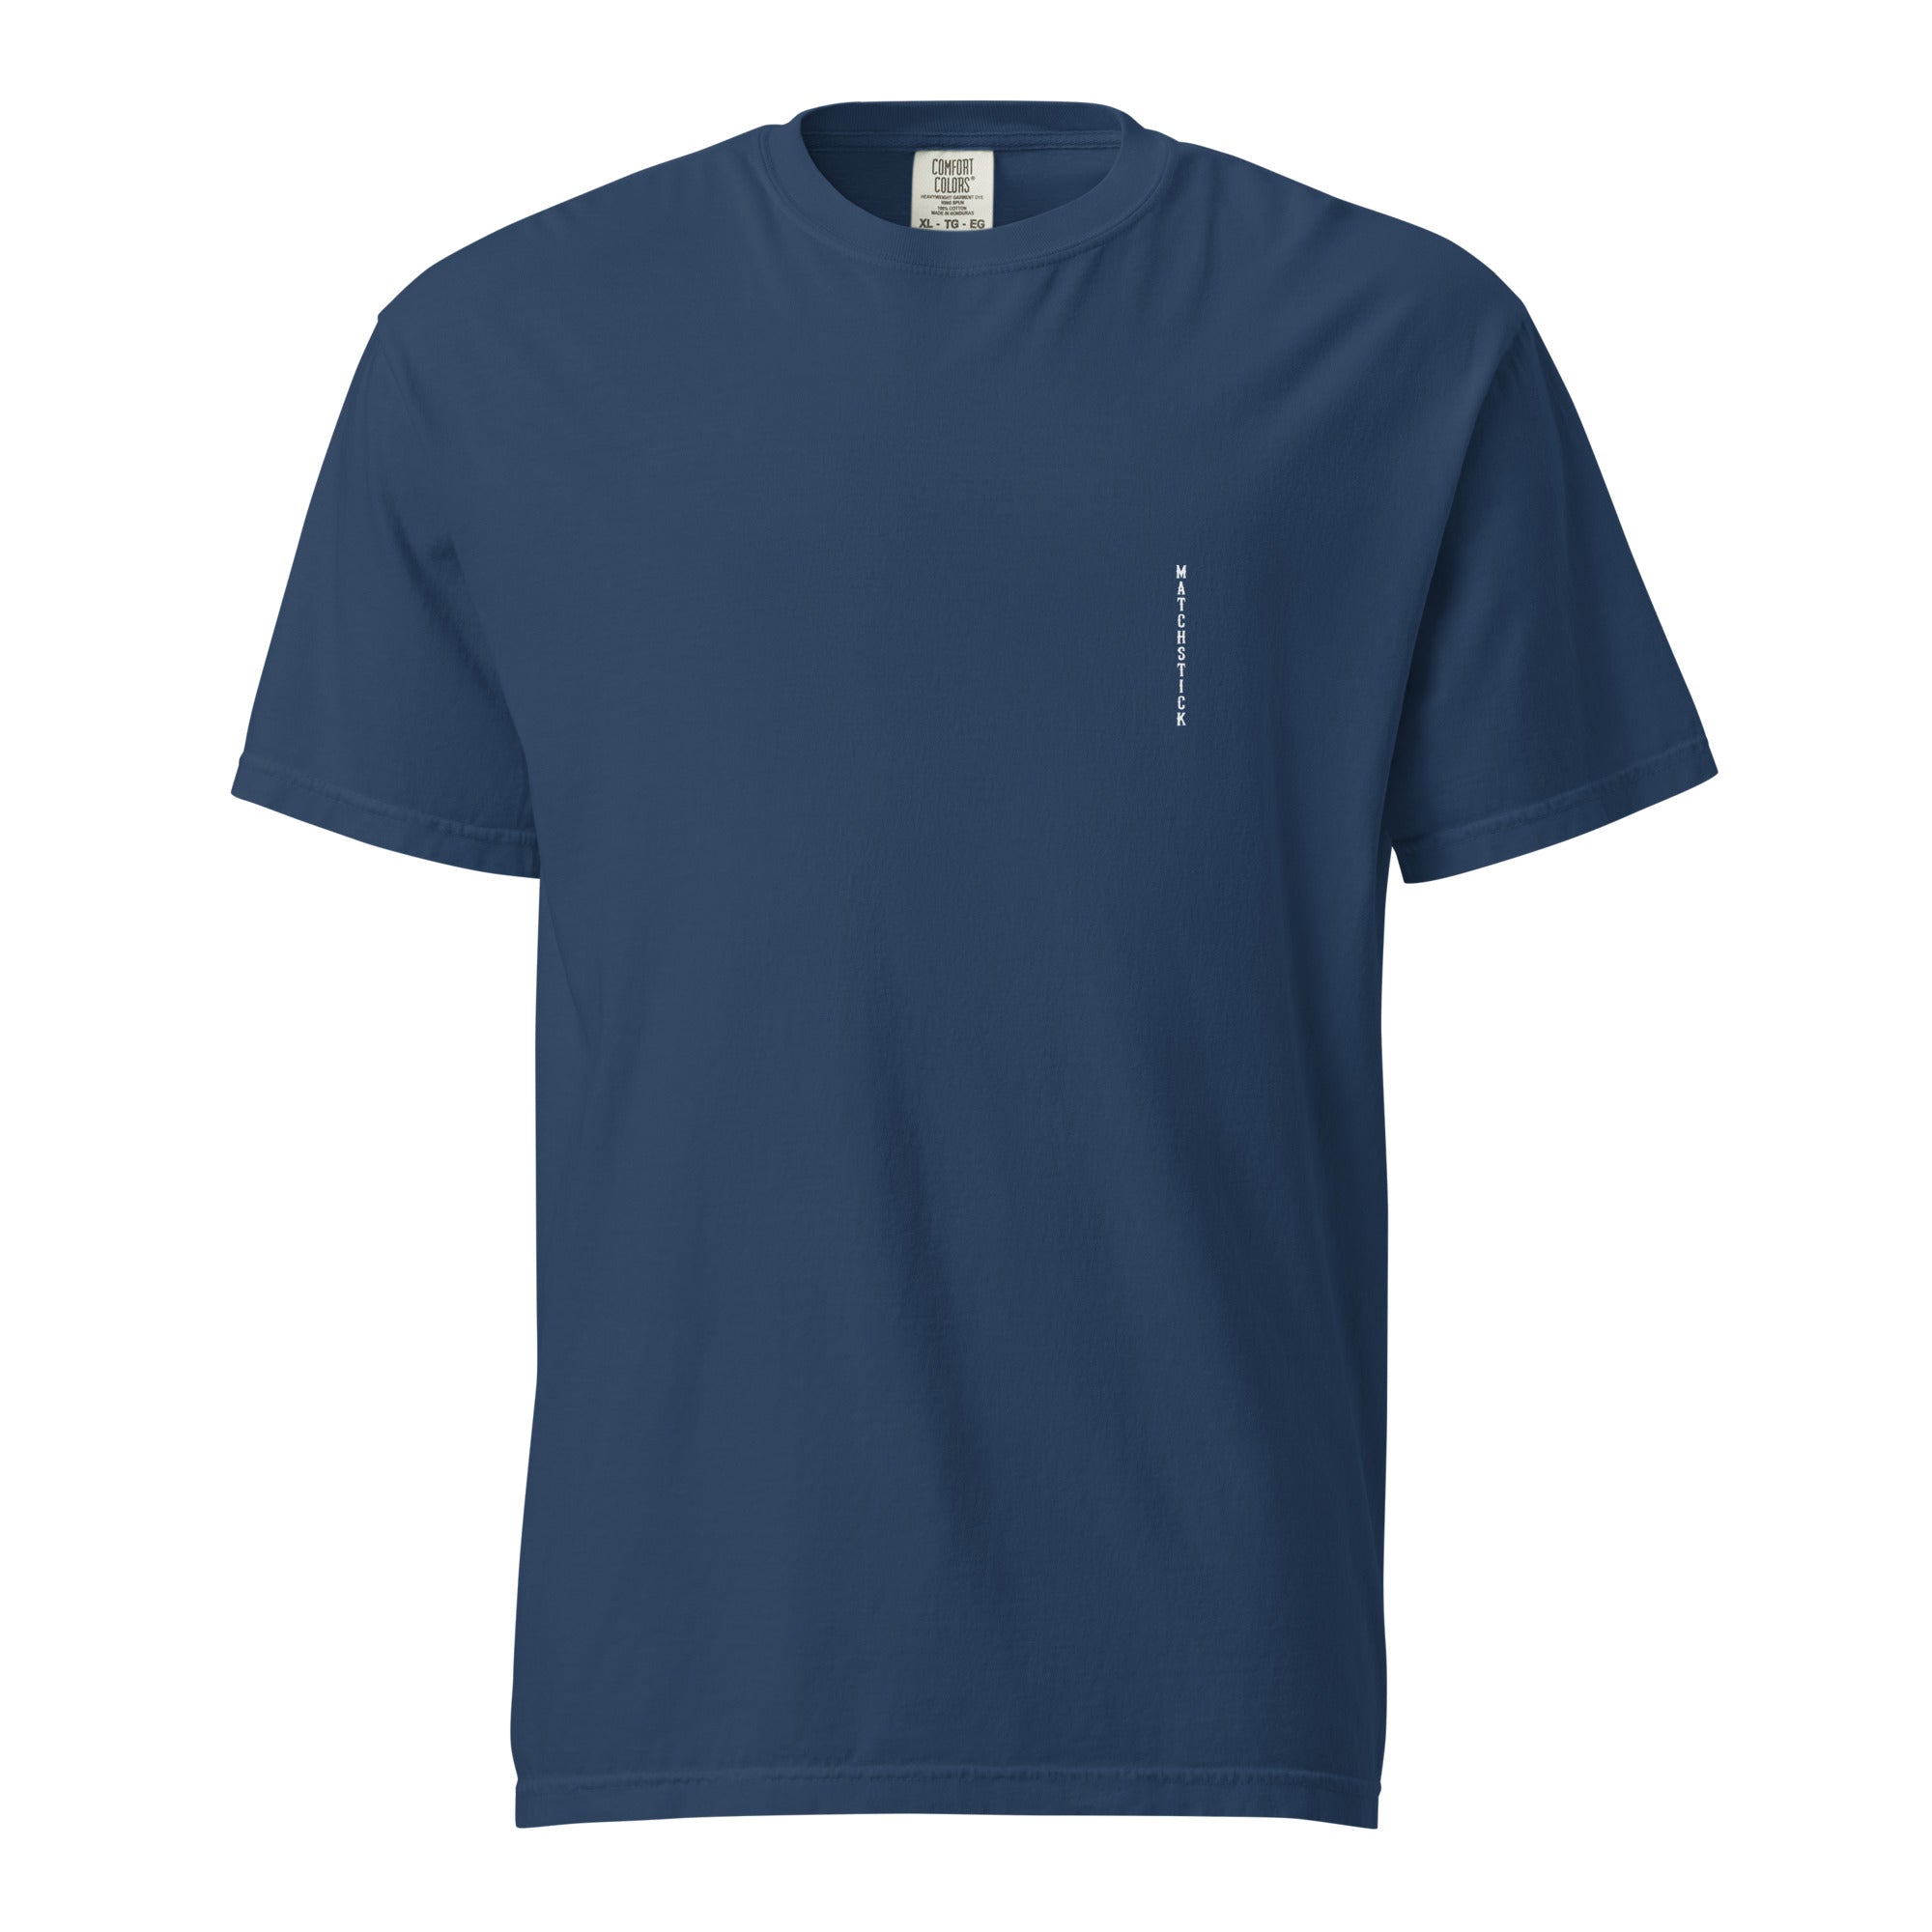 Head for the Hills - Unisex garment-dyed heavyweight t-shirt